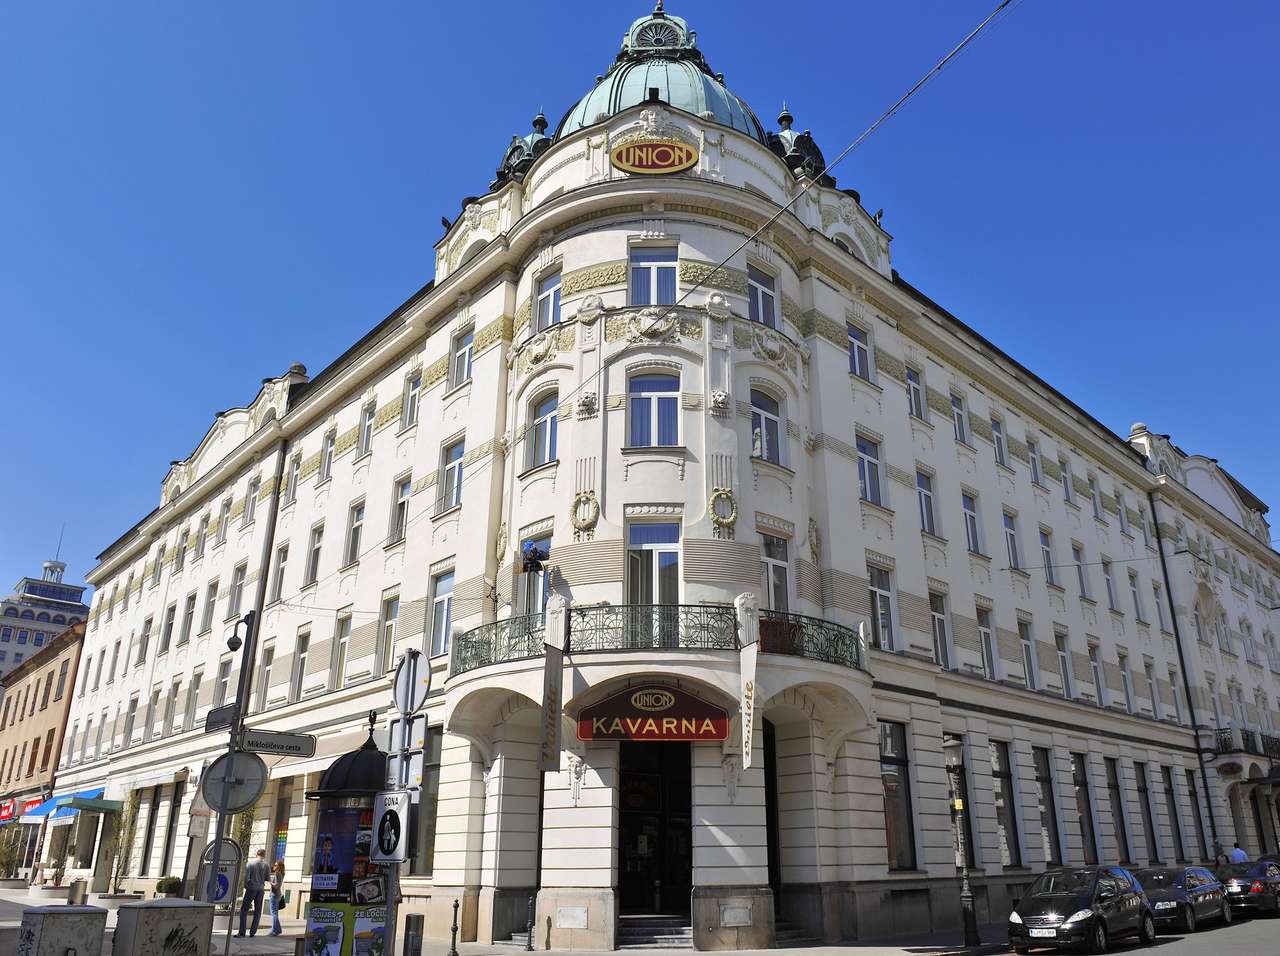 Ljubljana Grand Hotel Union Slovenië online puzzel